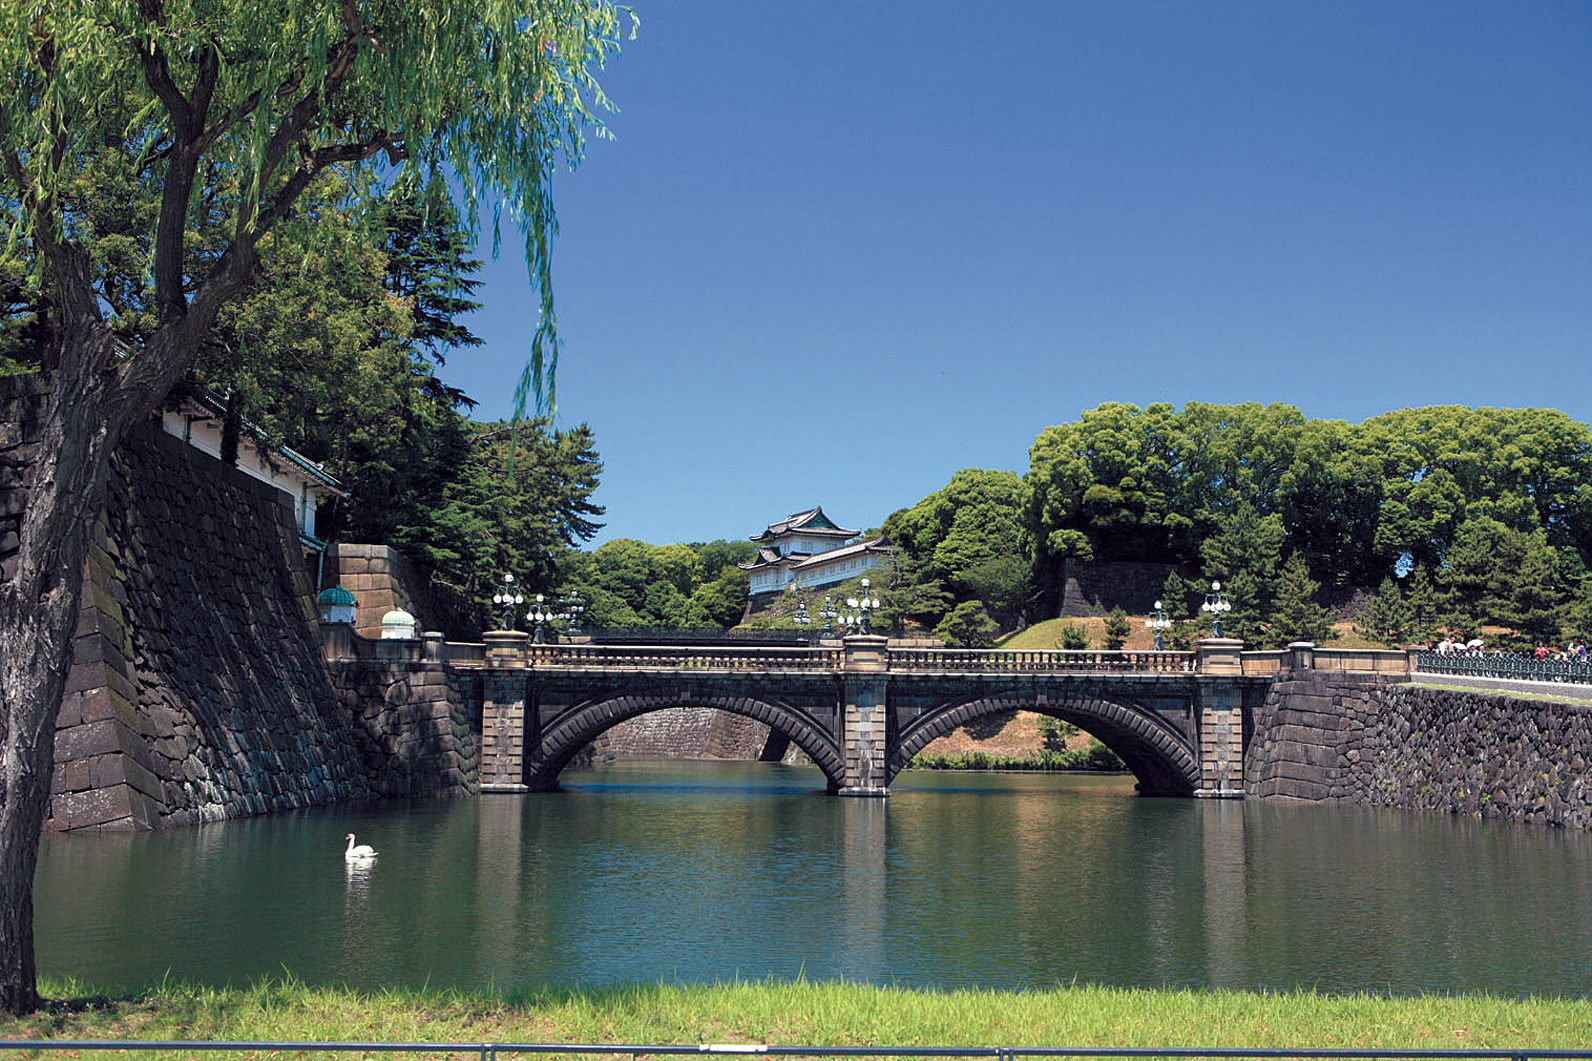 Cityrama Tokyo Morning - Meiji Shrine, Imperial Palace Gardens, and Senso-ji Temple (Asakusa) [A030]